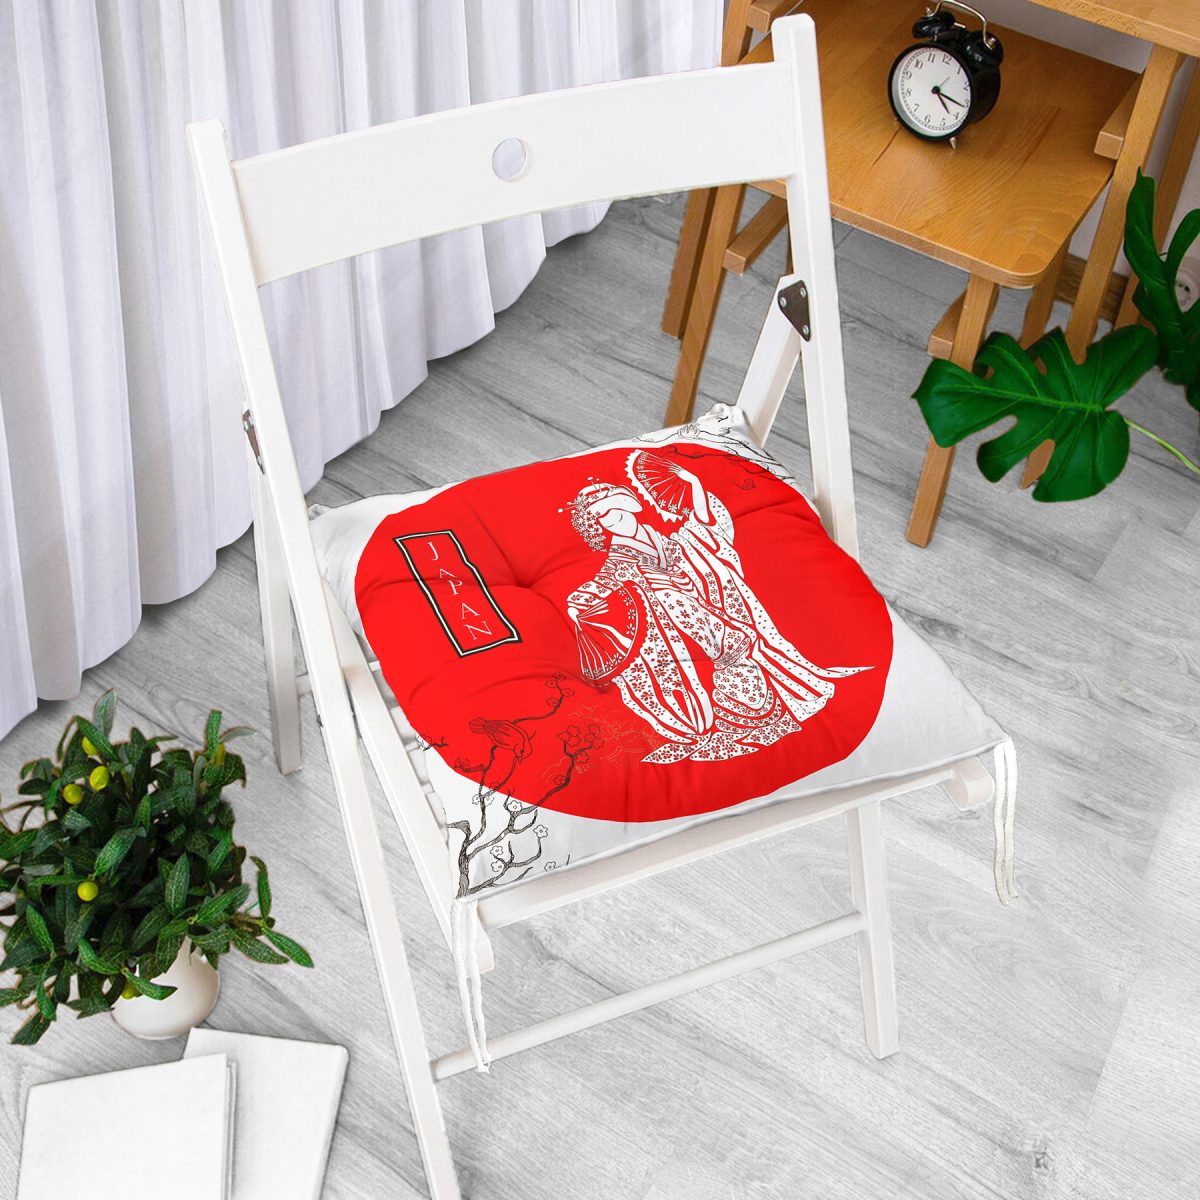 Ağaç Dal Motifli Japan Kız Motifli Dekoratif Pofuduk Sandalye Minderi Realhomes